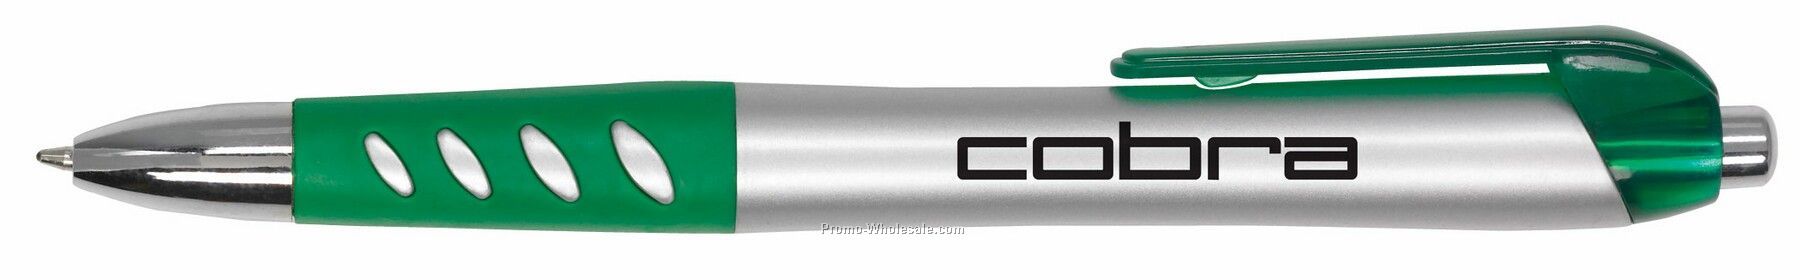 Mercury Sleek Barrel Pen With Vented Rubber Grip - 4 Hour